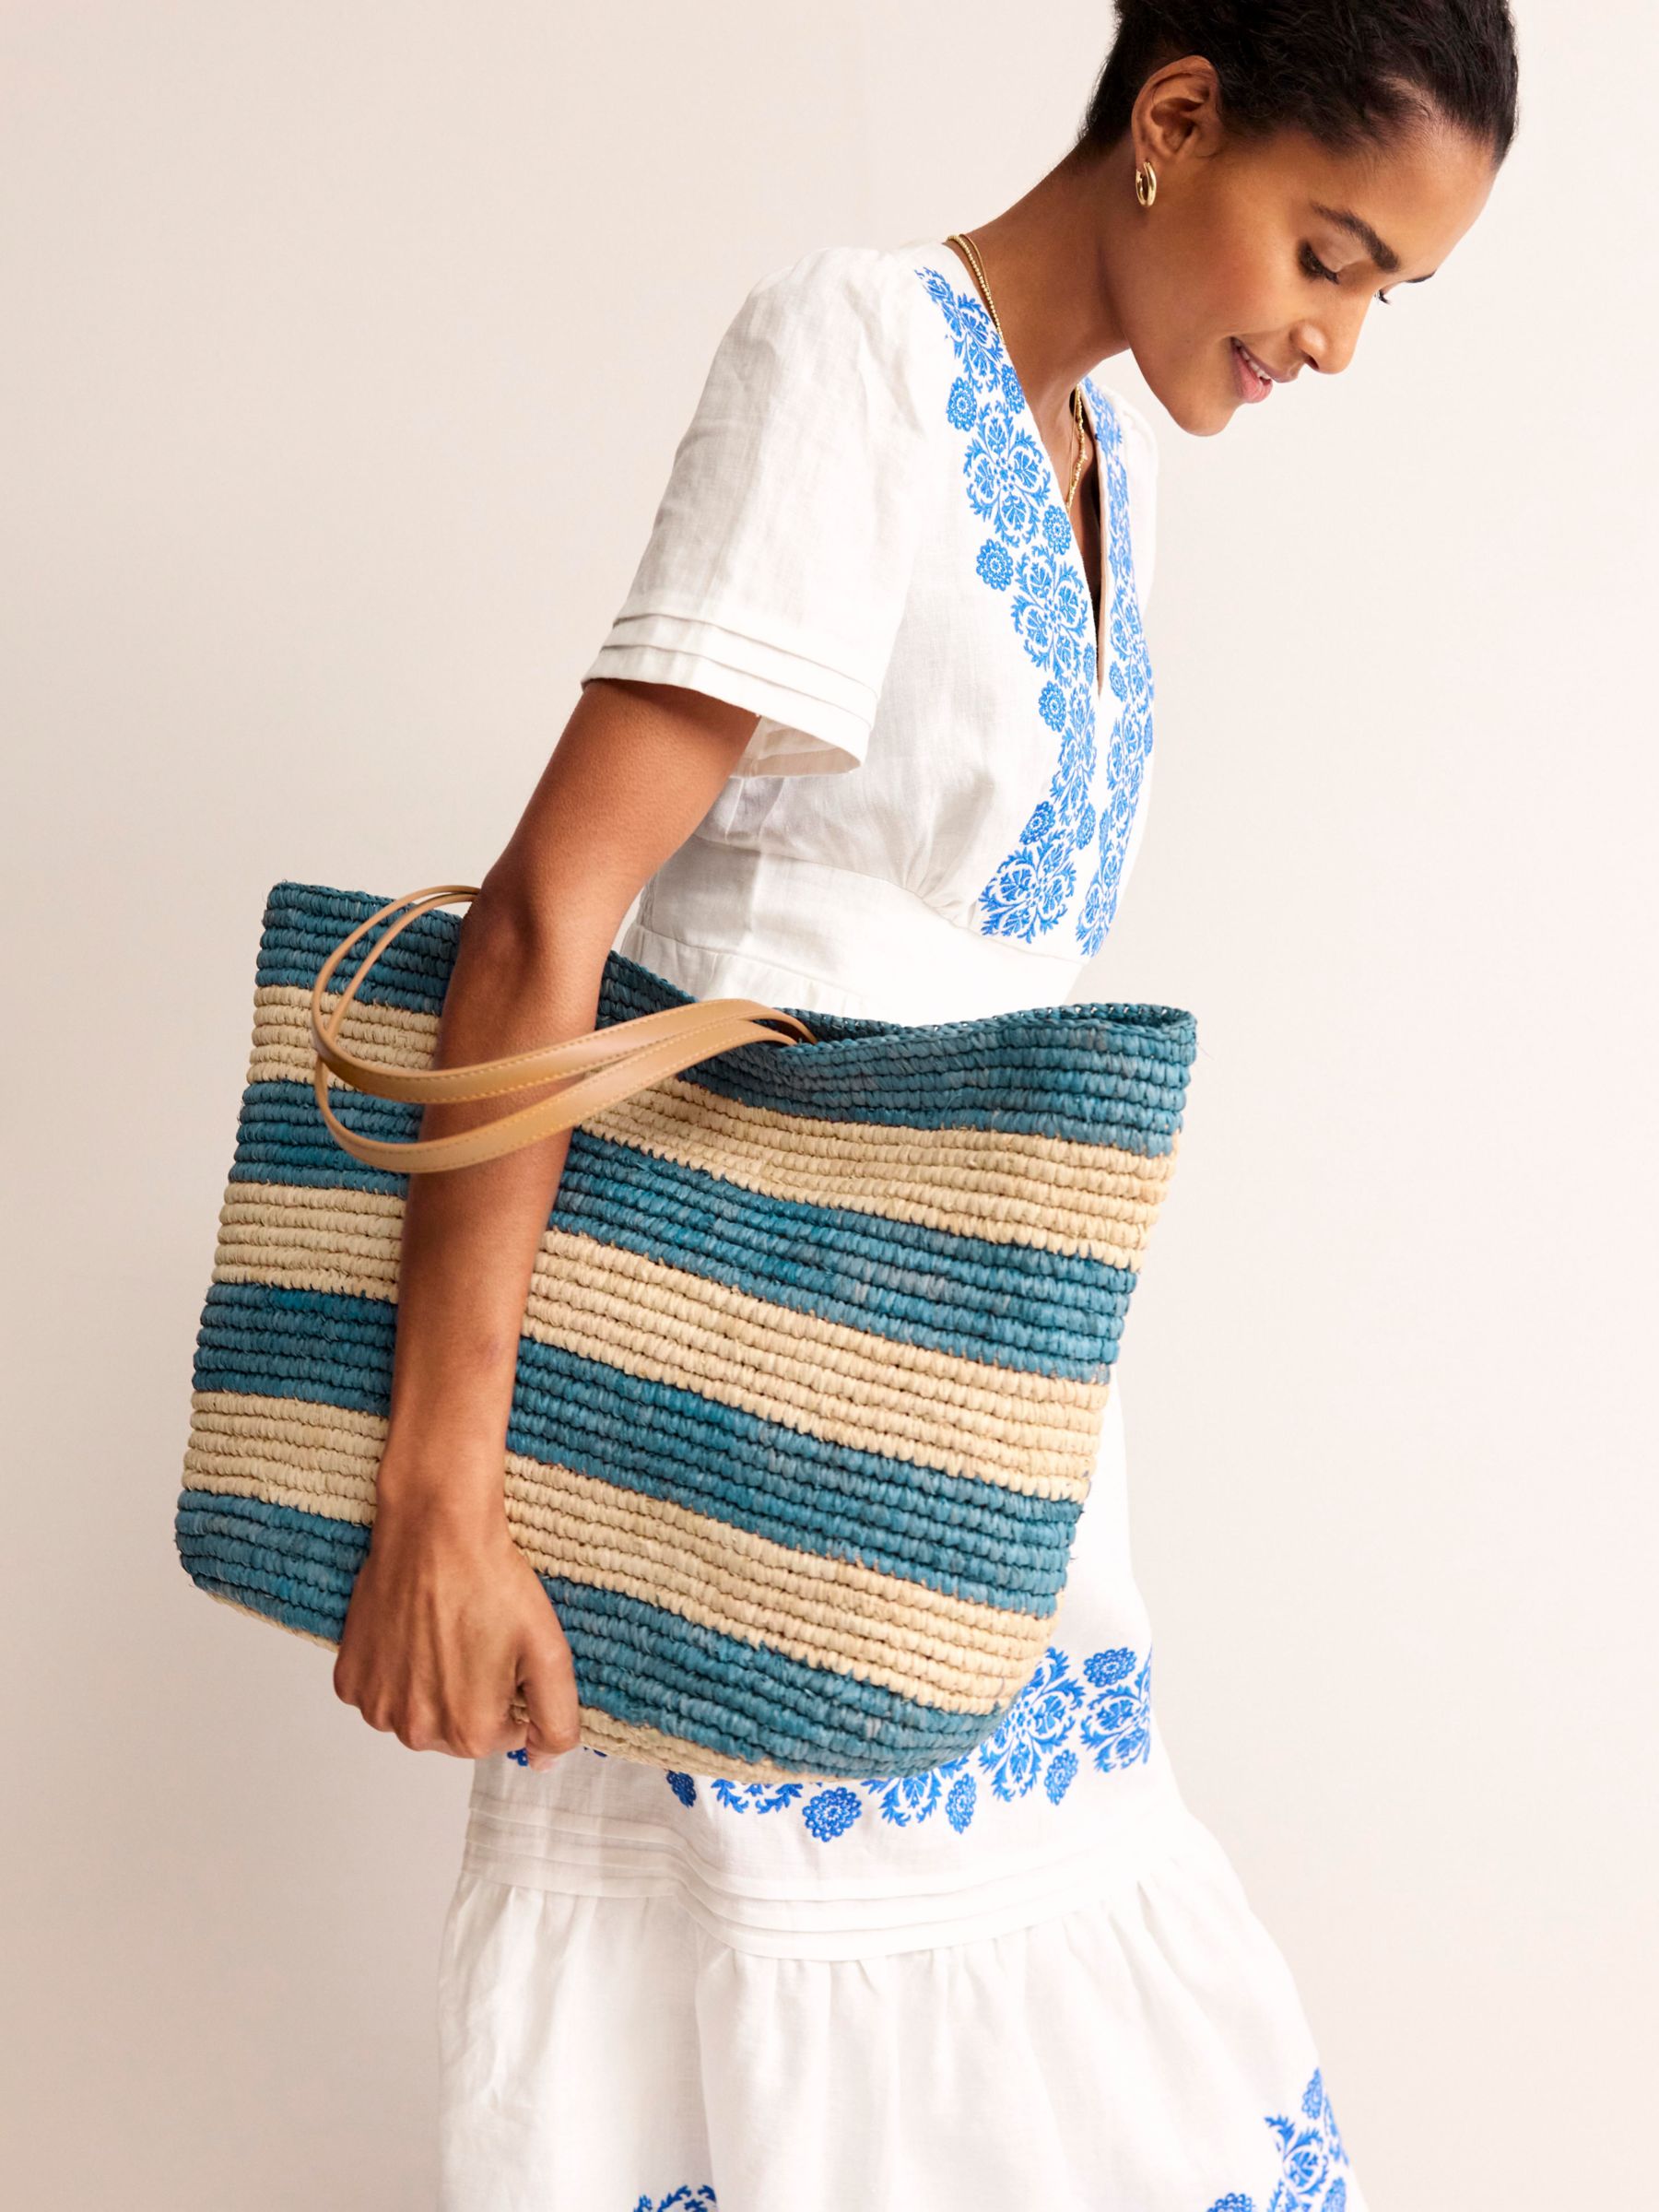 Boden Raffia Tote Bag, Natural/Blue, One Size